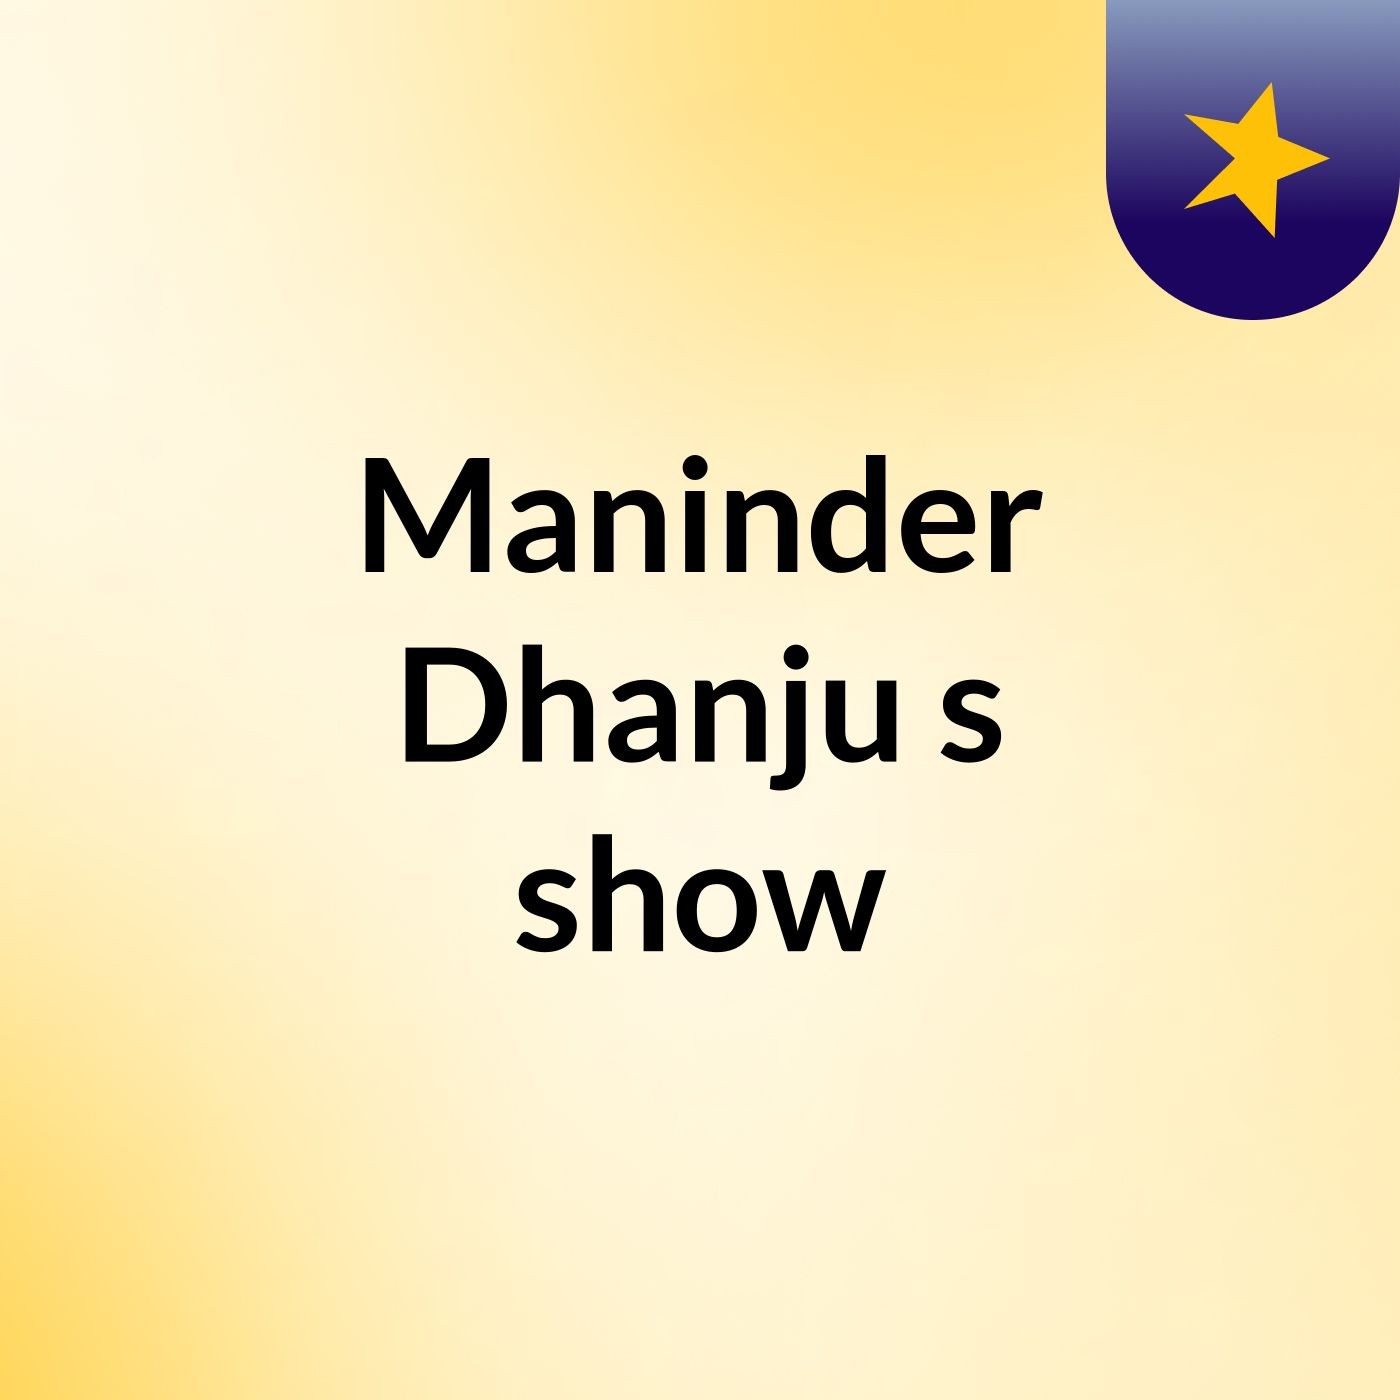 Maninder Dhanju's show